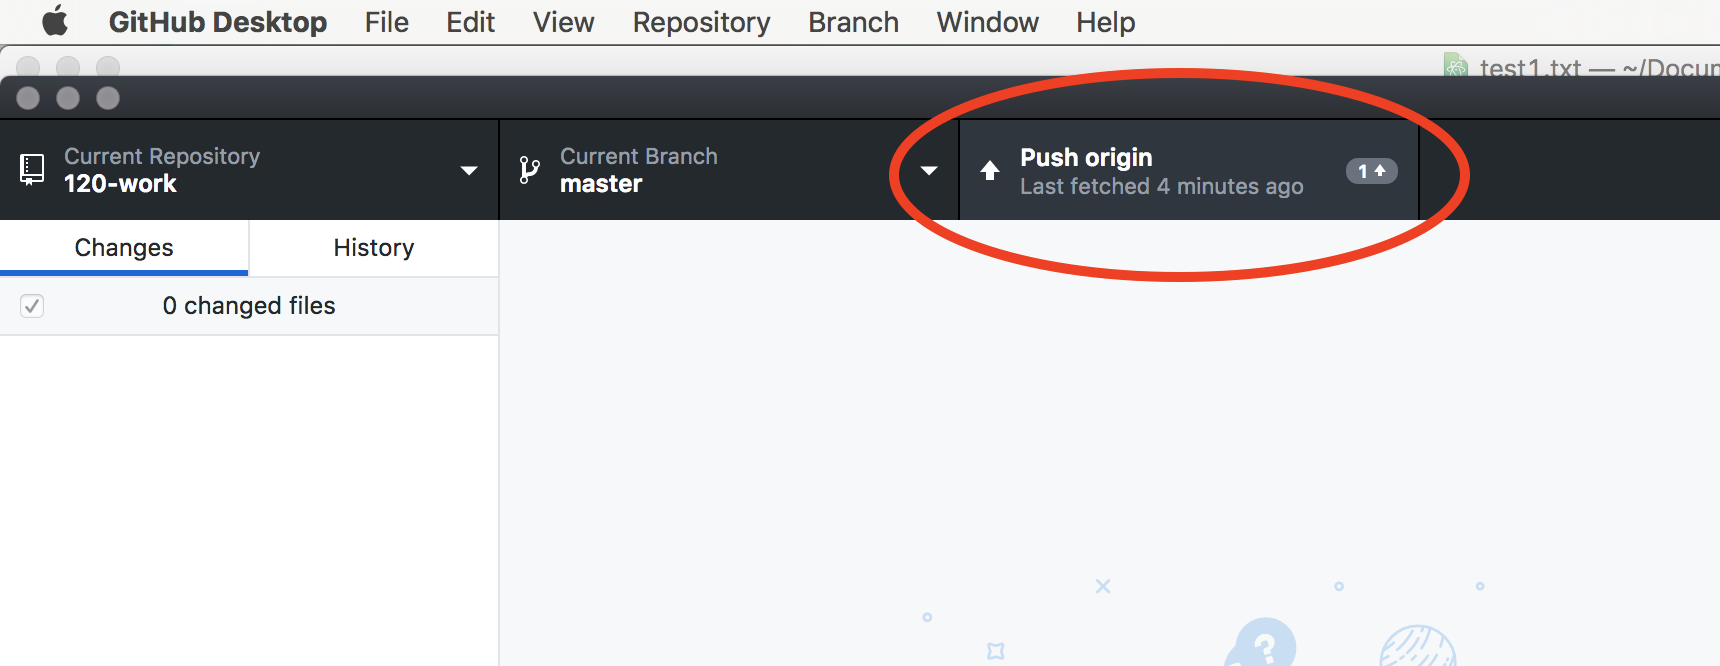 Push Origin Button example in GitHUb Desktop